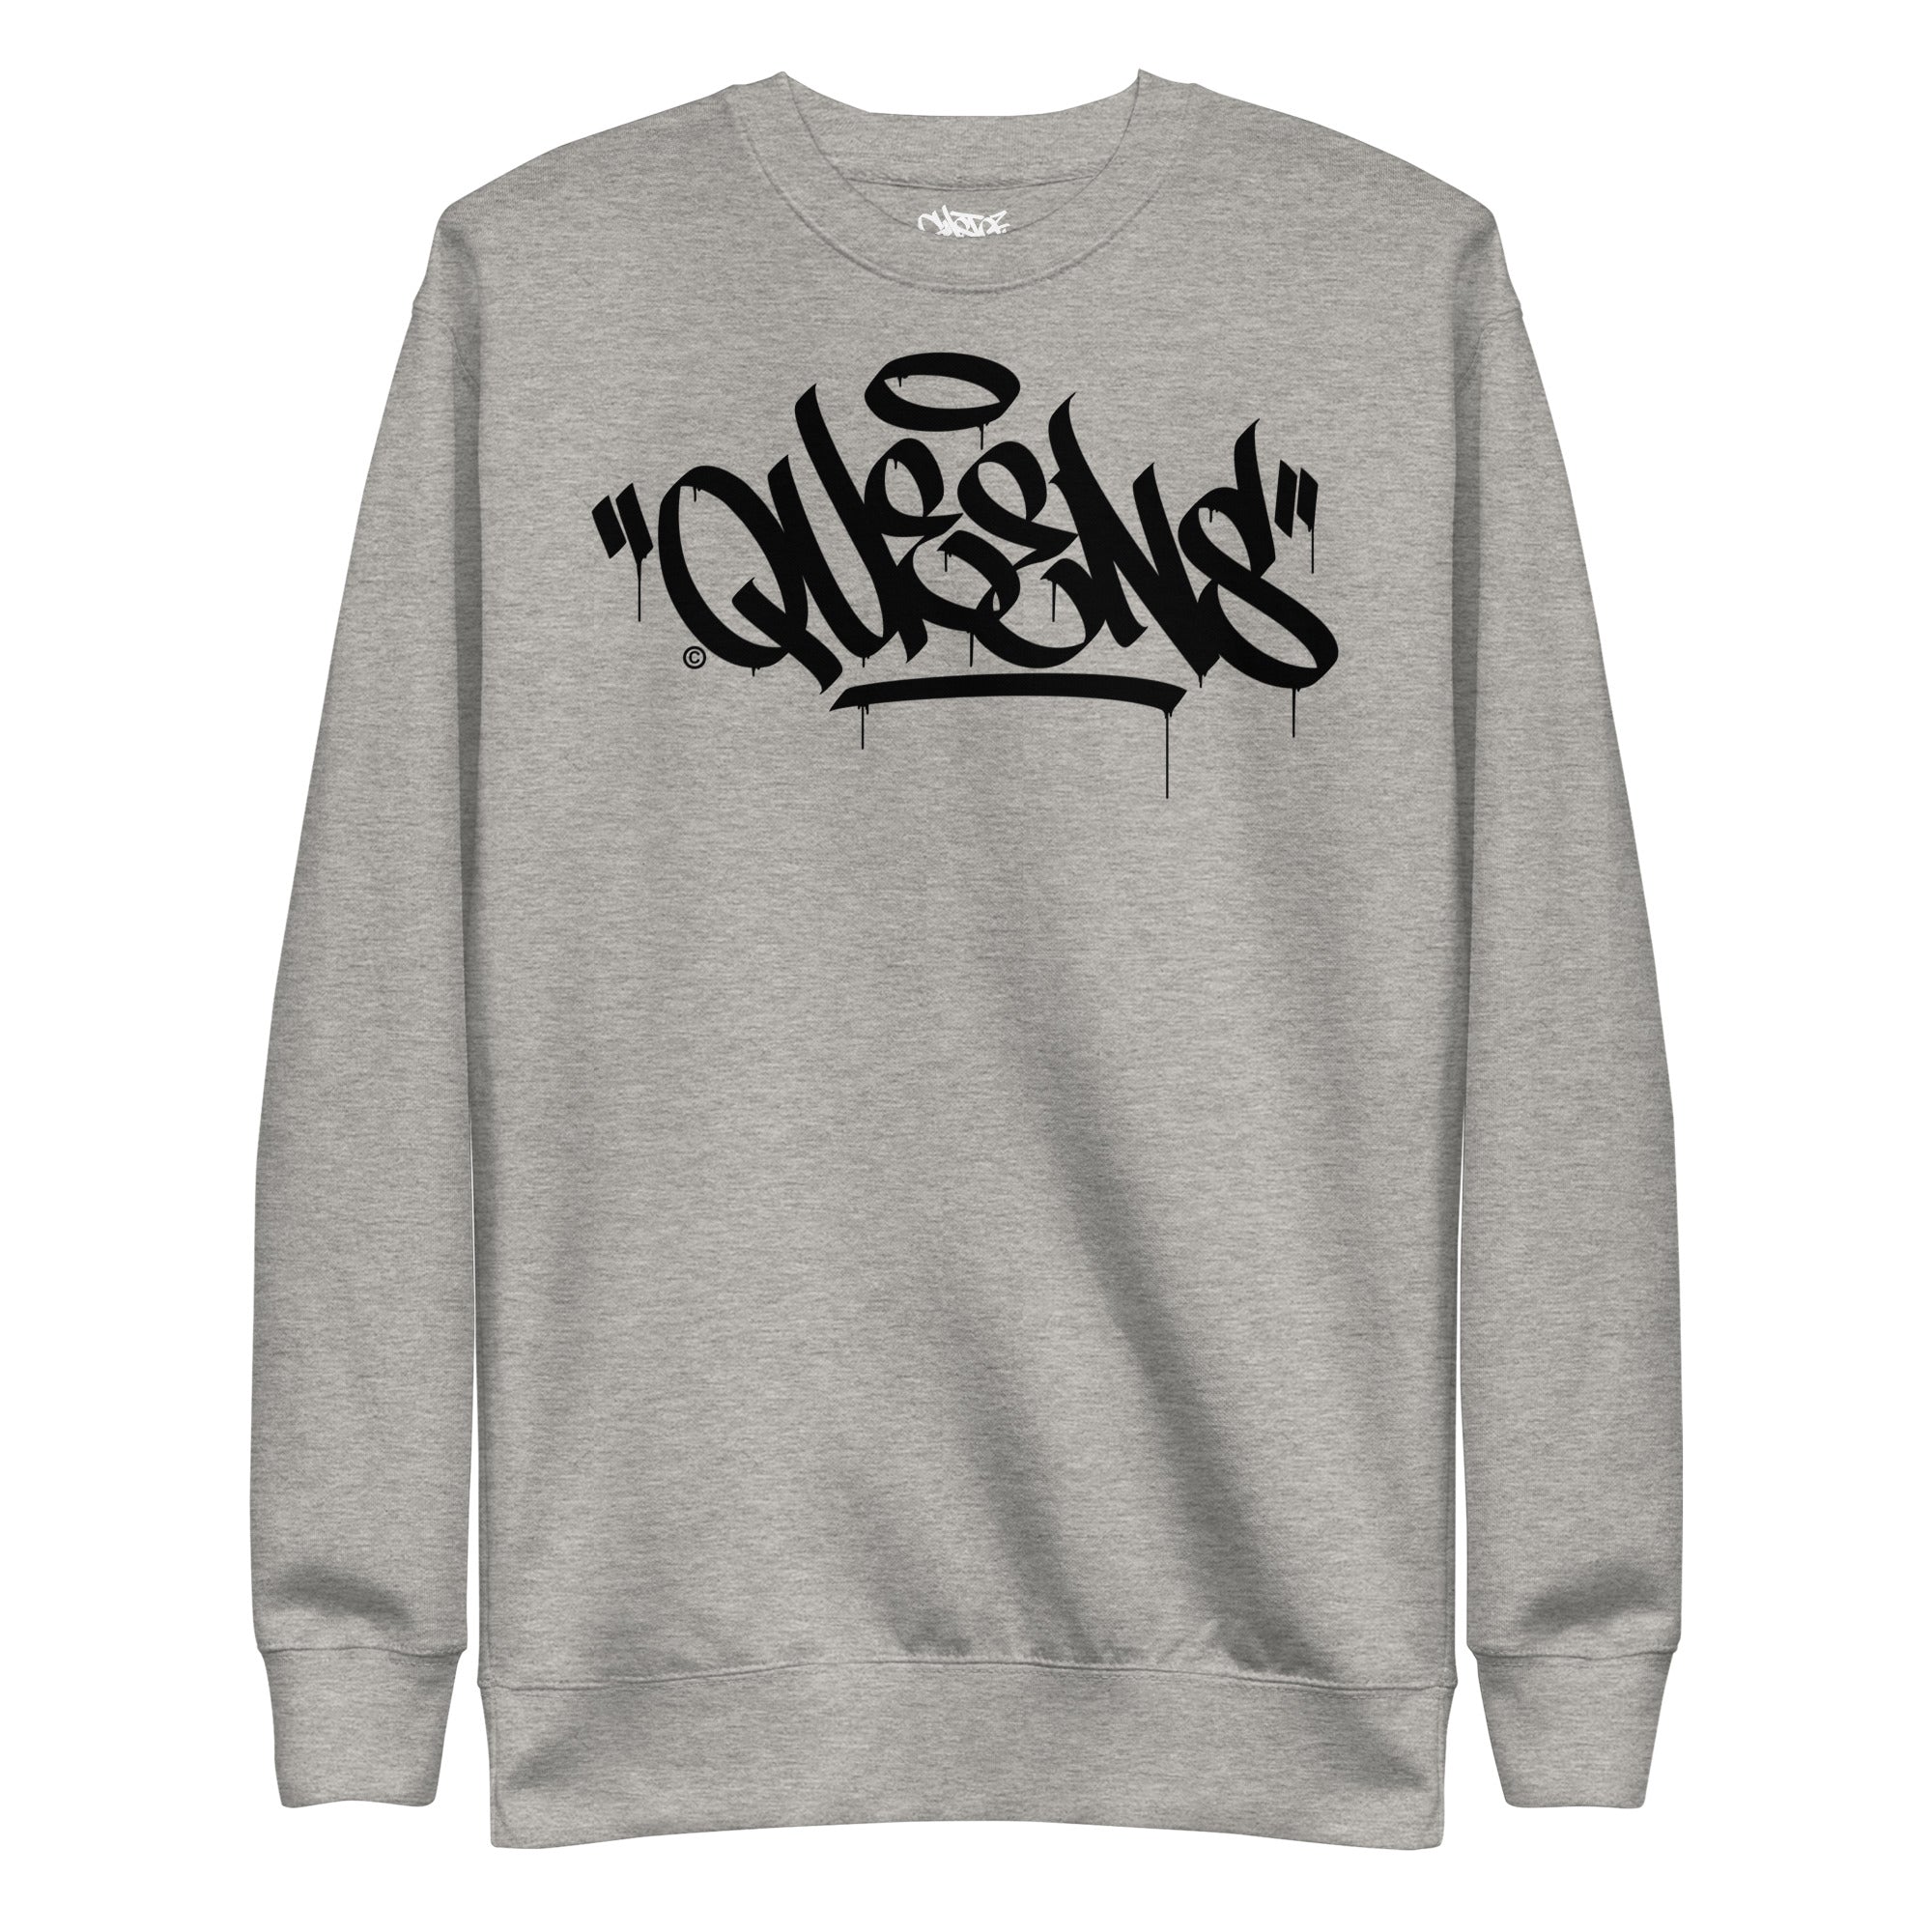 "Queens" Graffiti Handstyle - Unisex Premium Sweatshirt